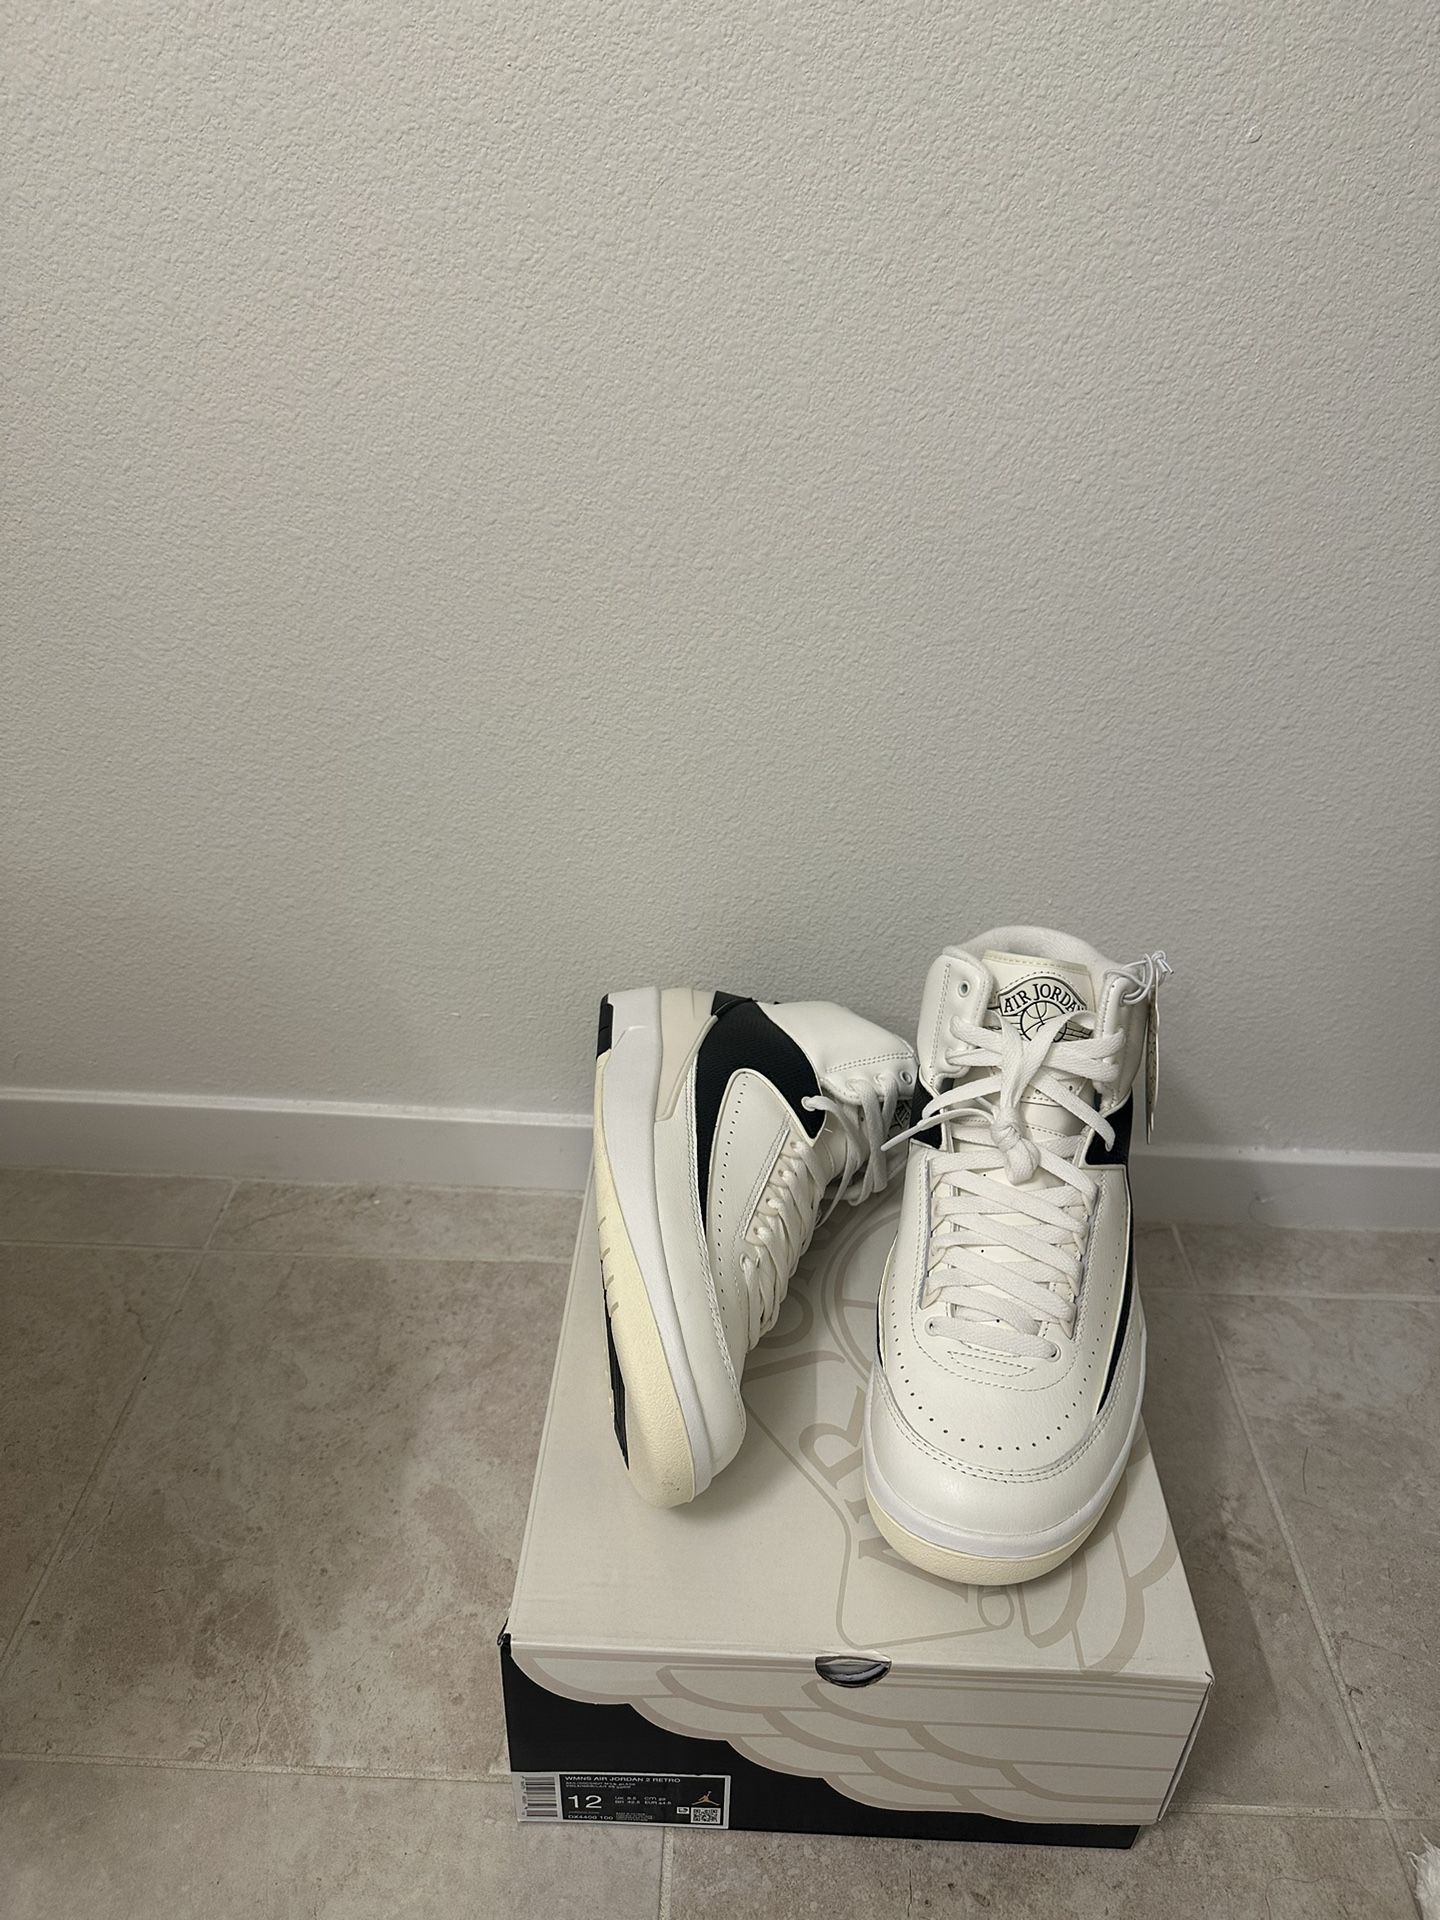 Air Jordan 2 Retro Men’s Shoes Size 10.5 Men 